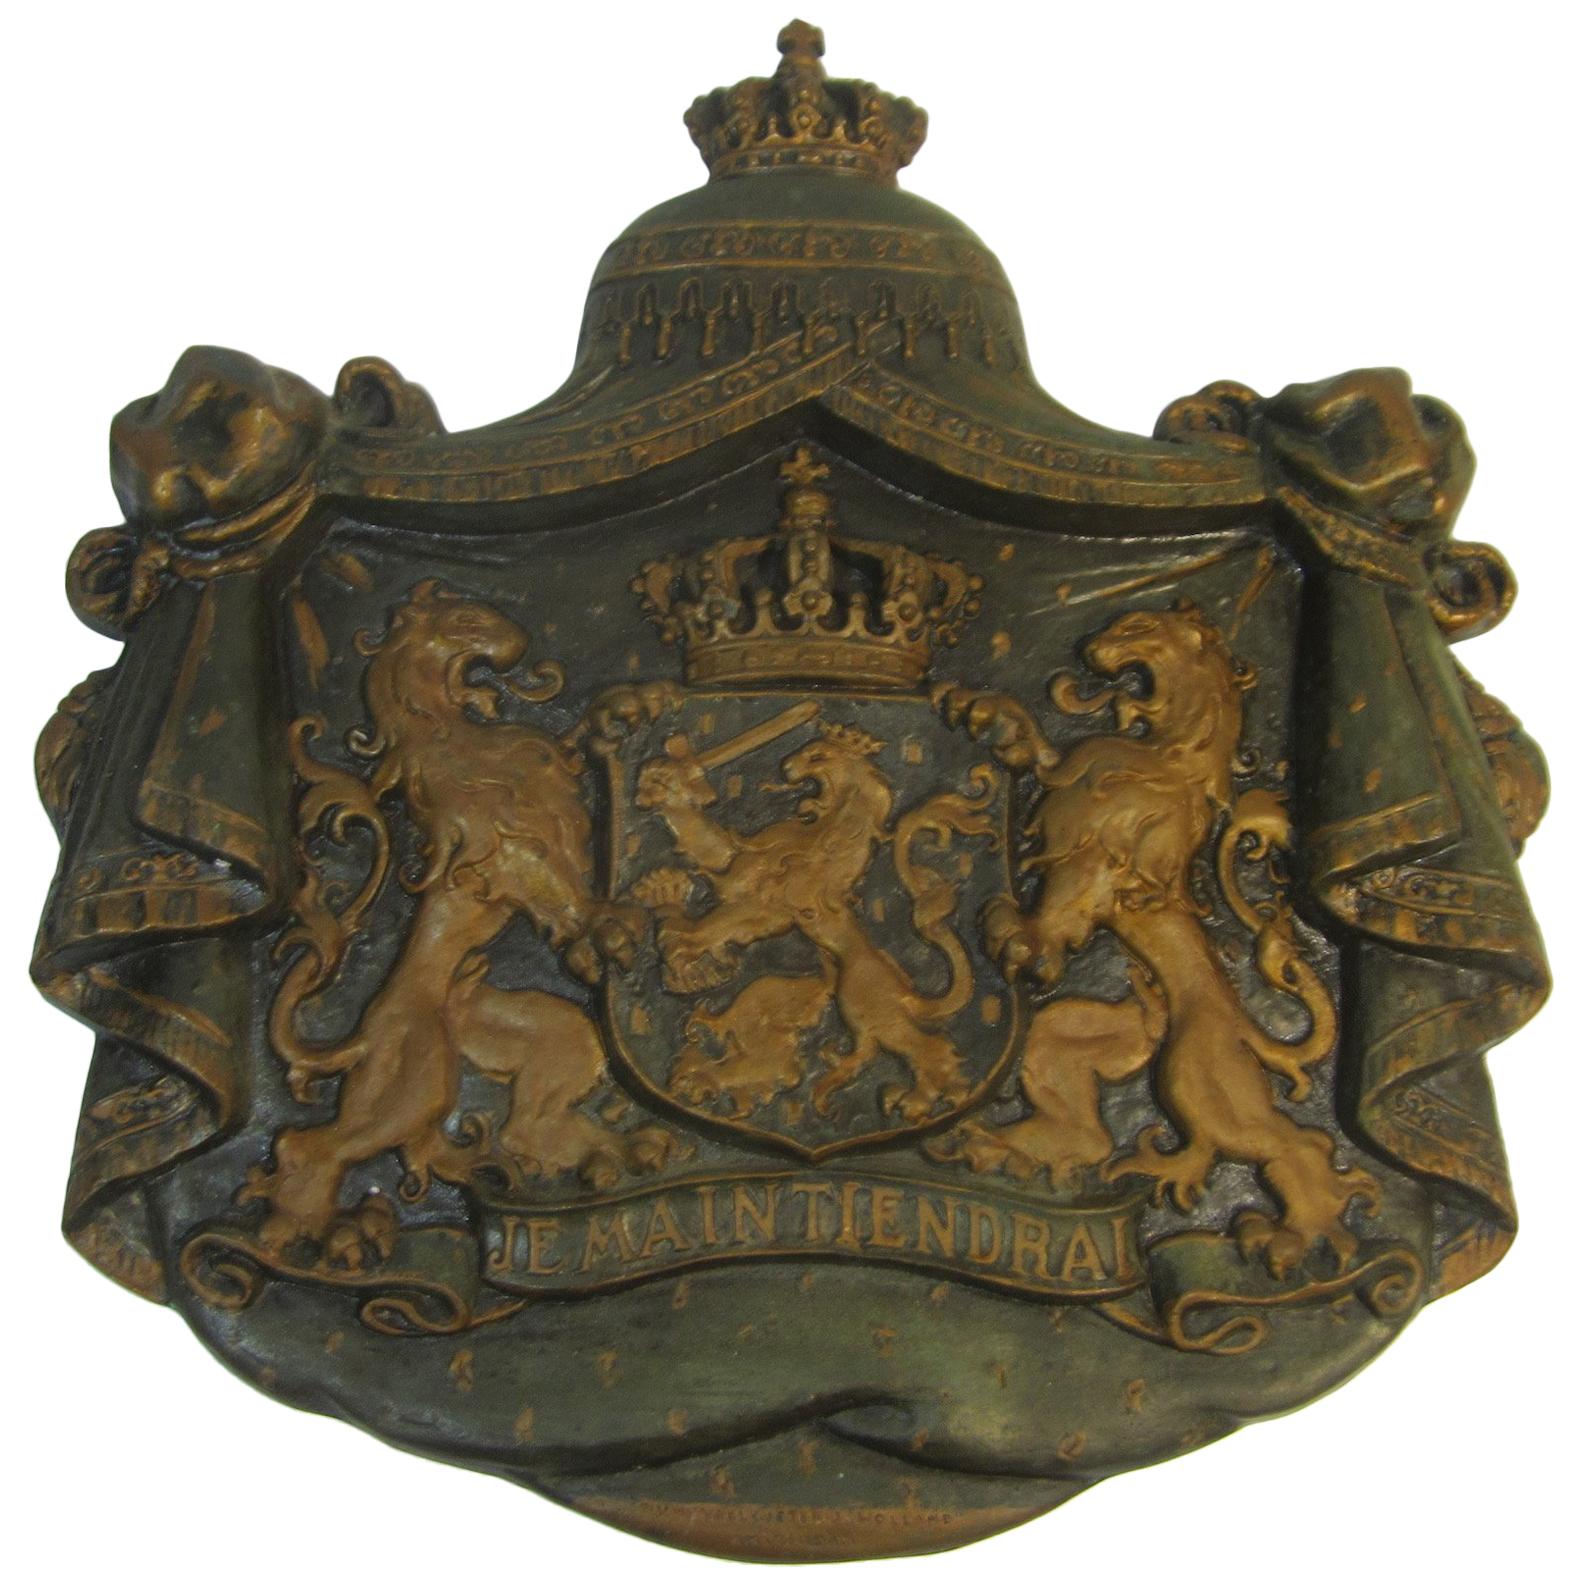 Dutch Coat of Arms